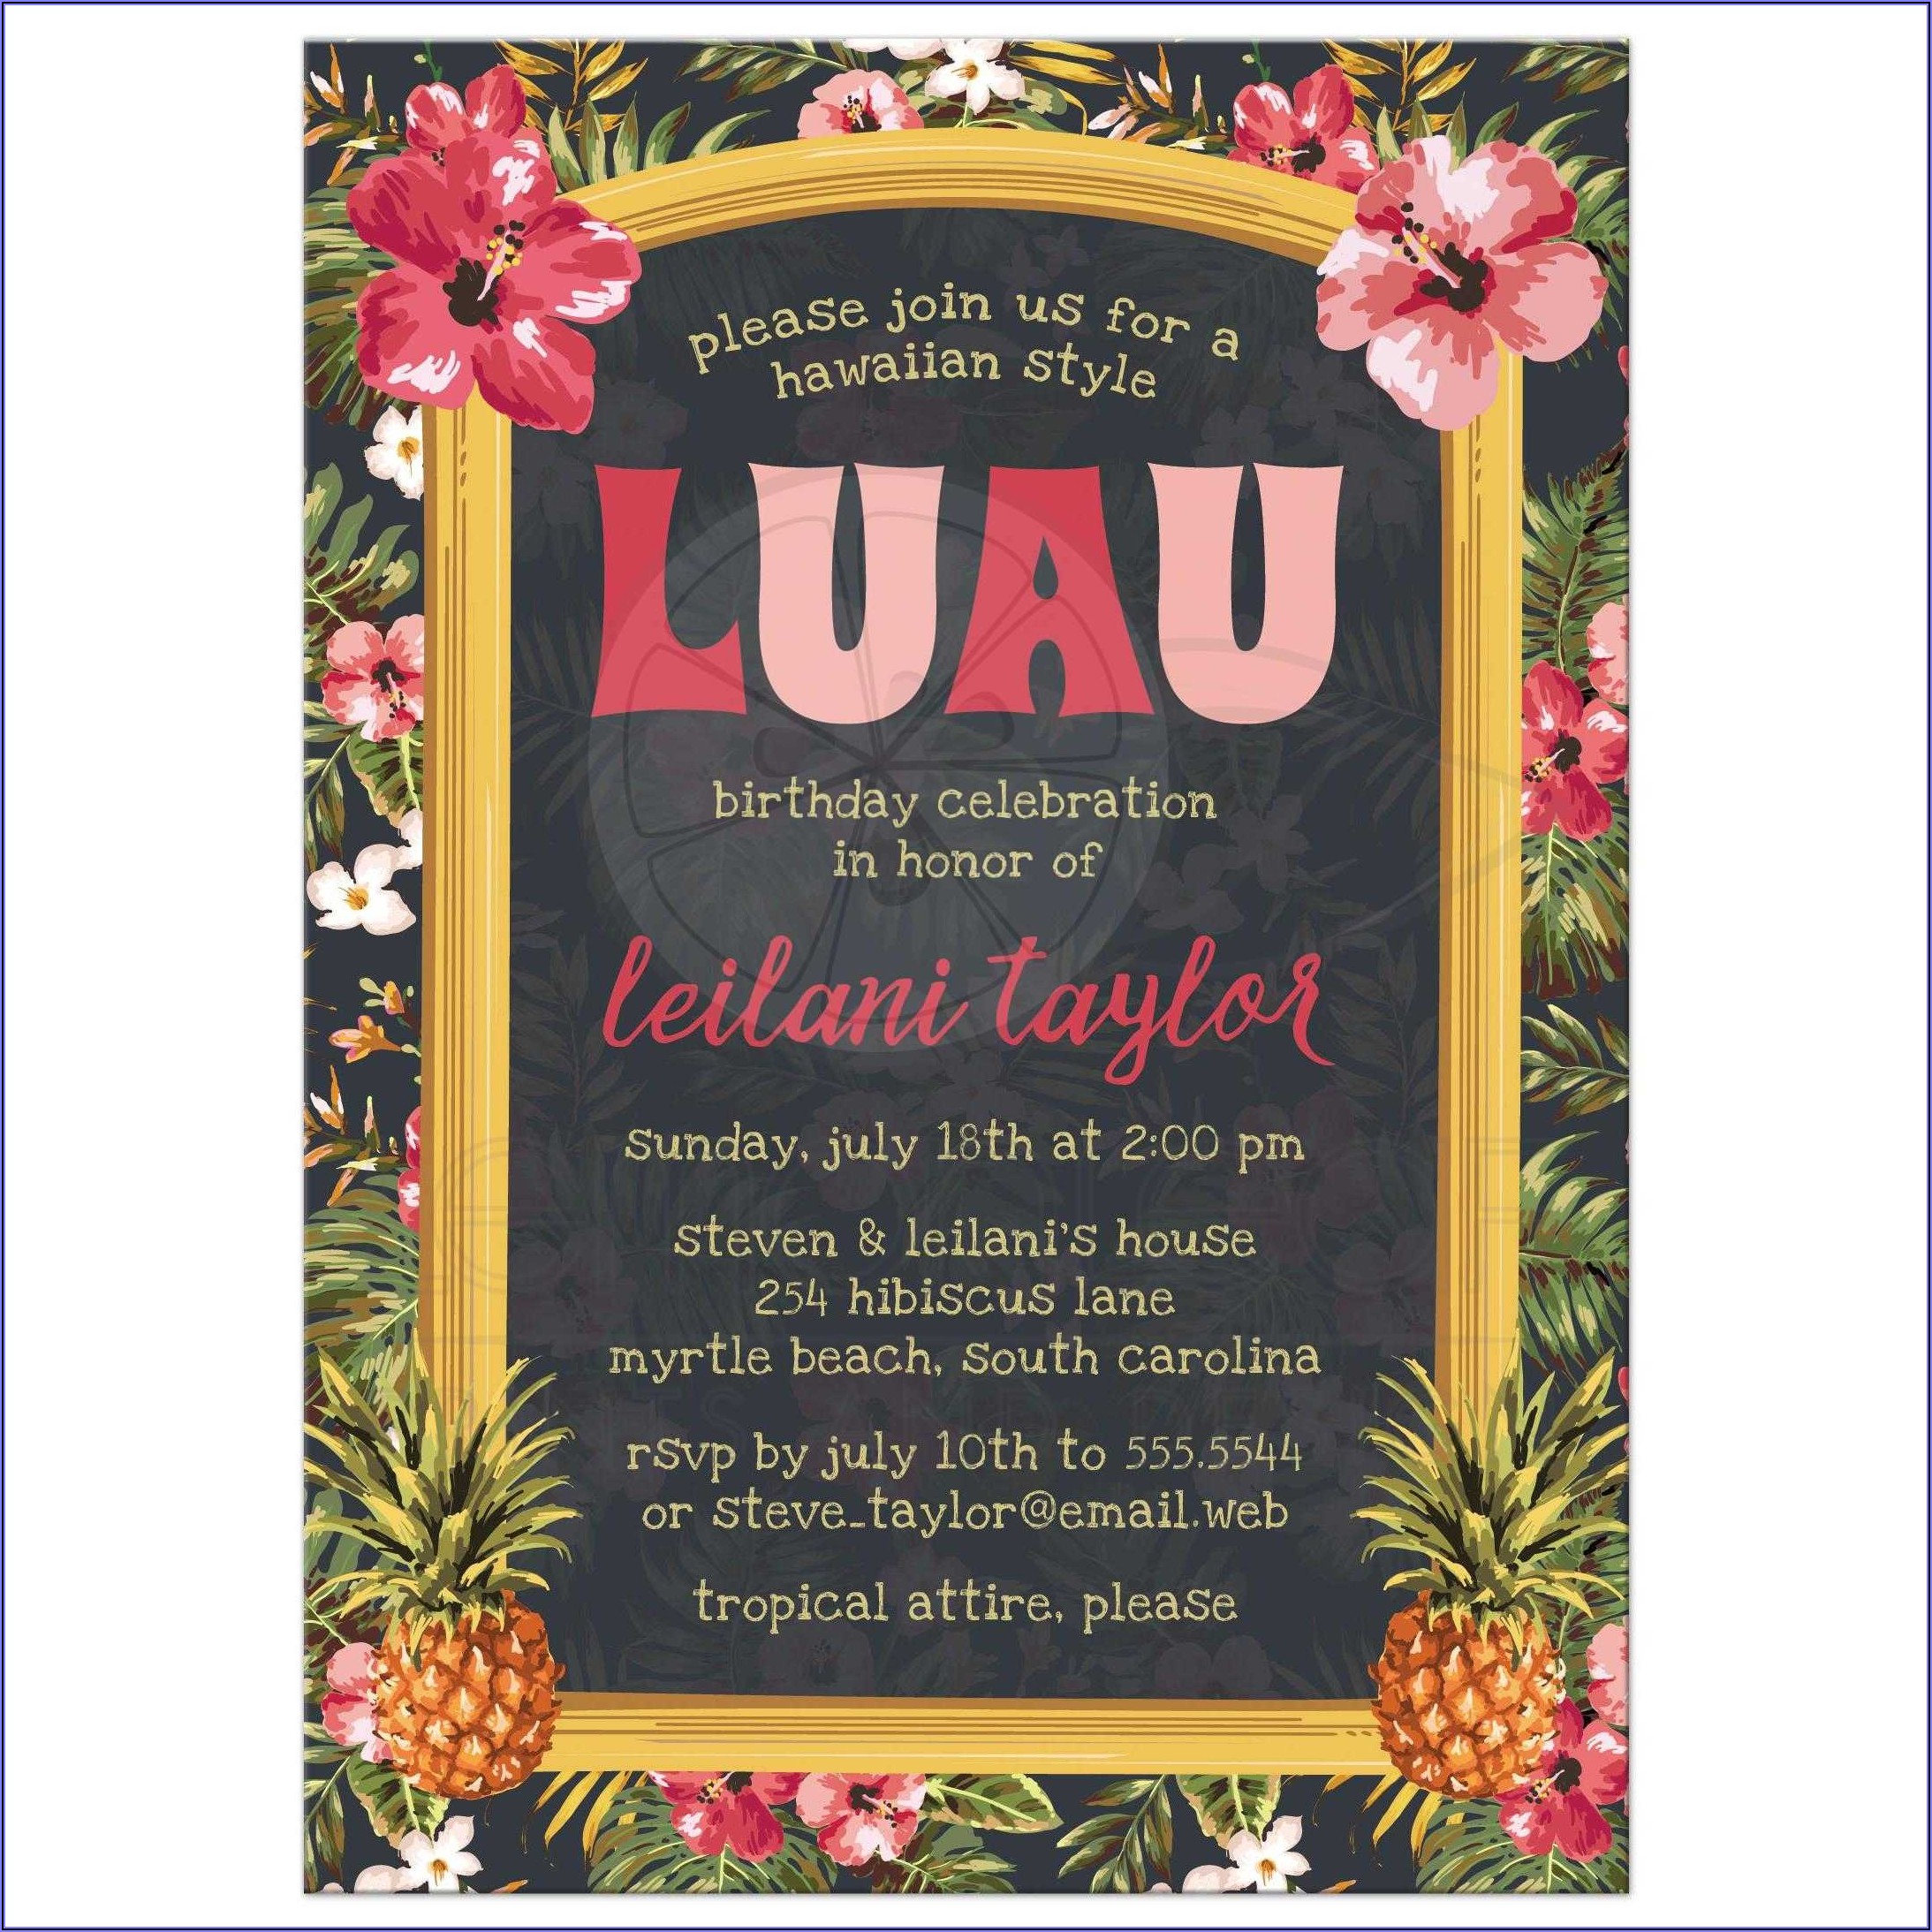 Luau Birthday Invitations Online